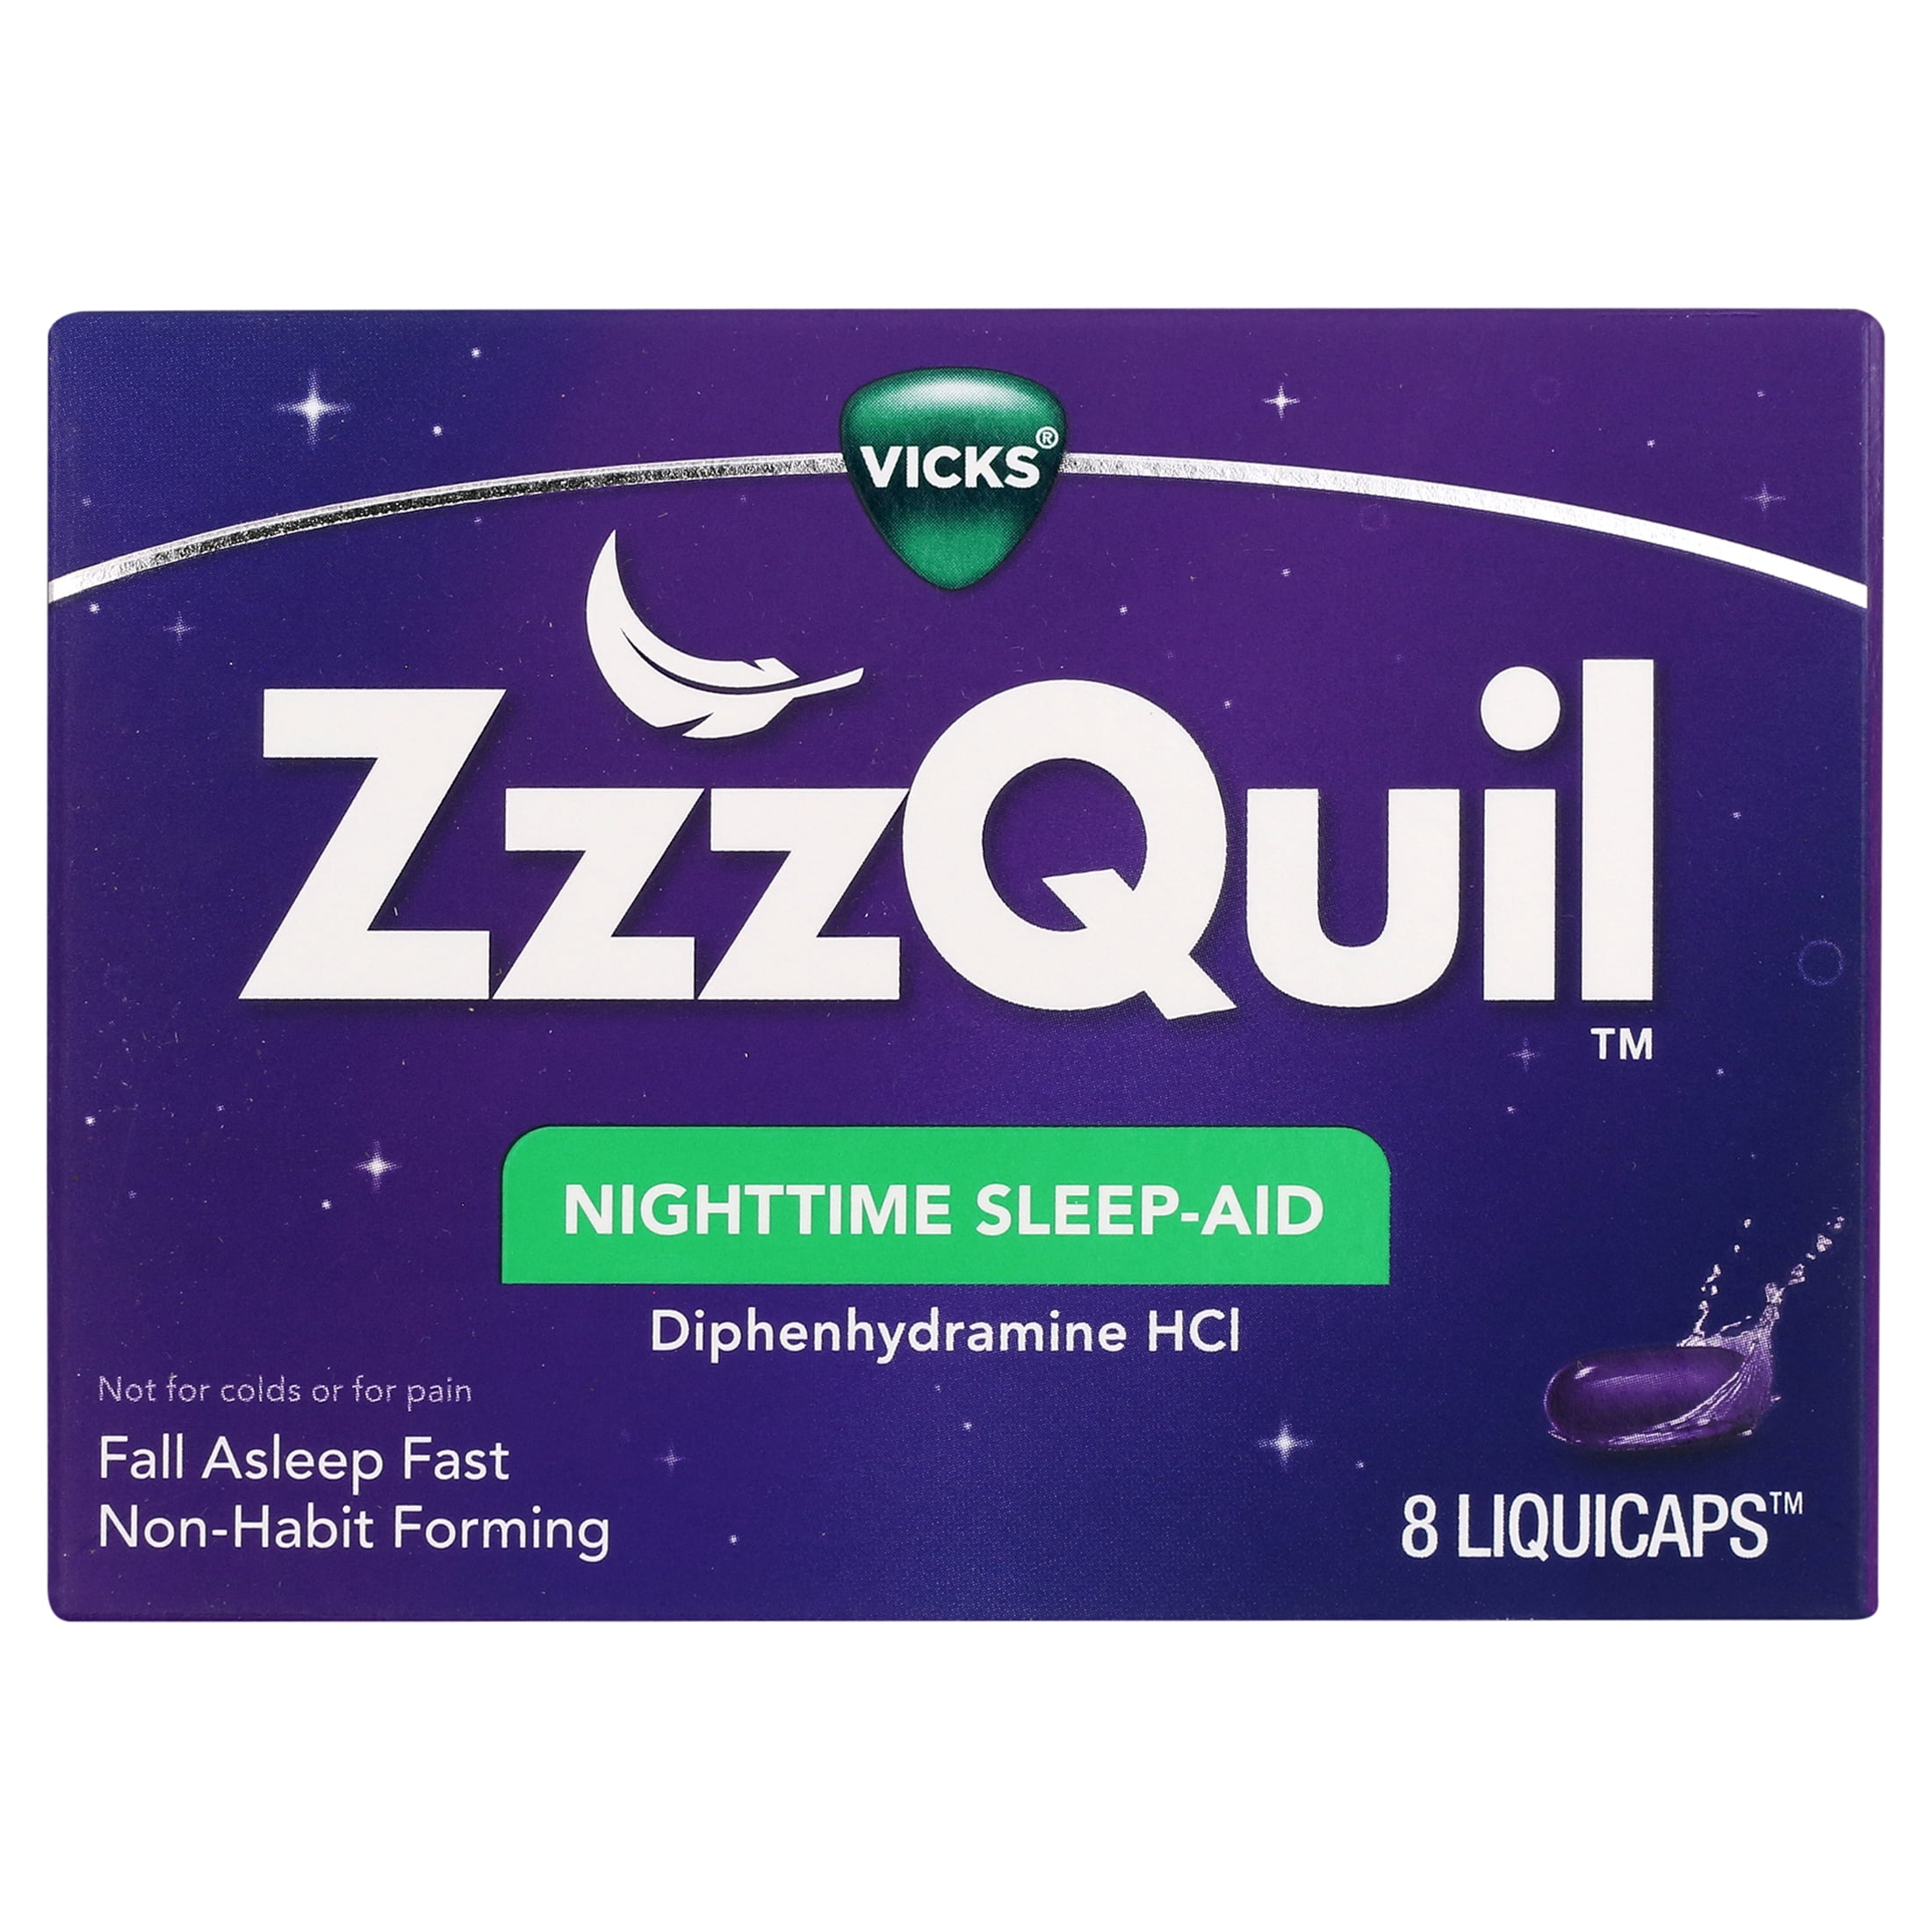 Vicks ZzzQuil Nighttime Sleep Aid Liquicaps (Regular)